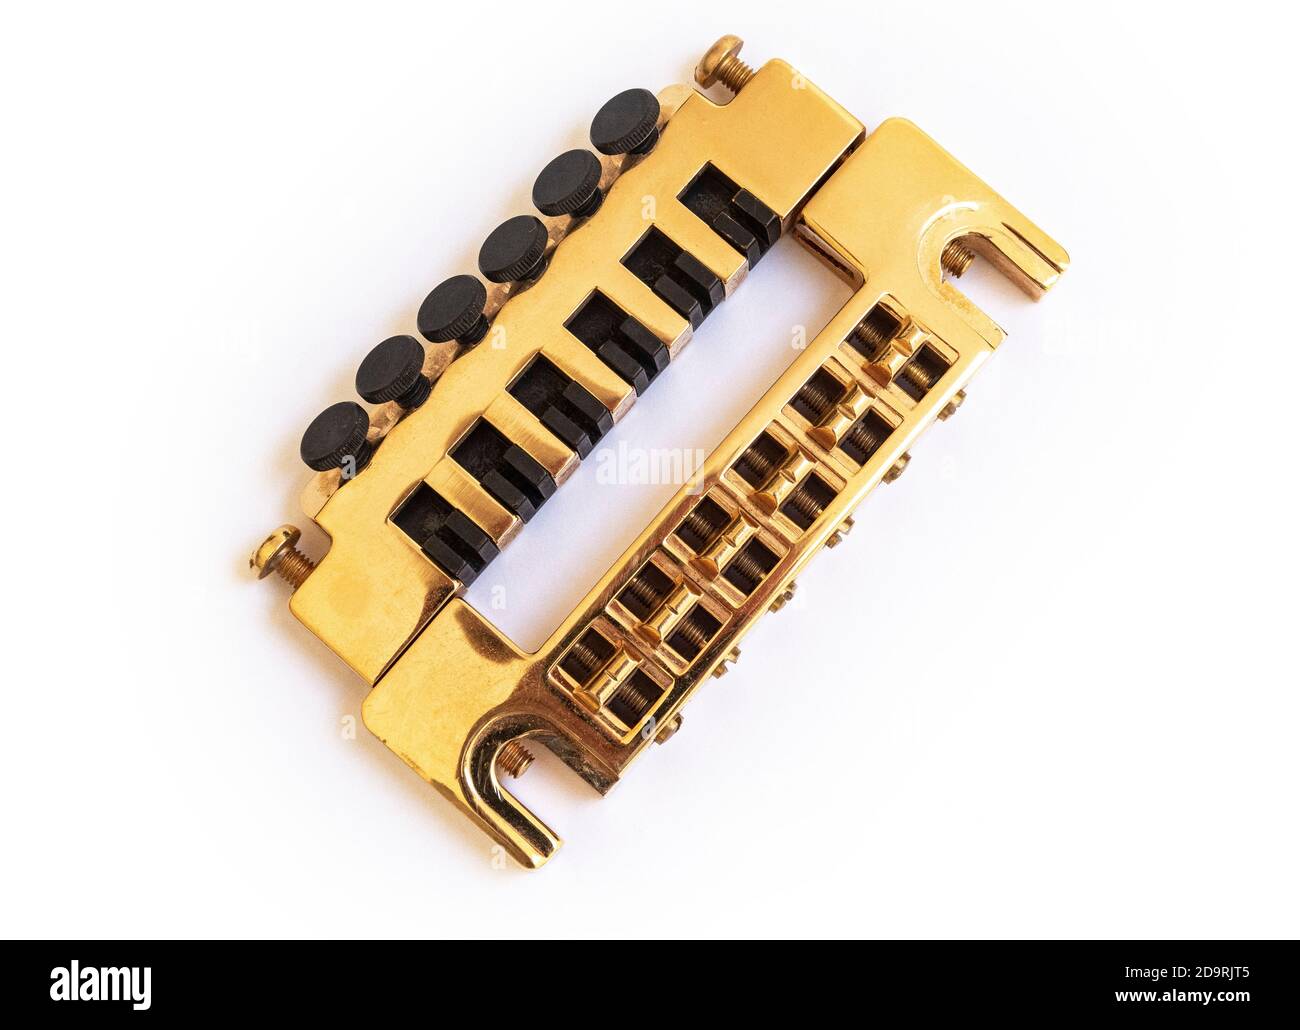 Schaller 456 guitar bridge in gold colour, fixed bridge with fine micro tuners tuning Stock Photo